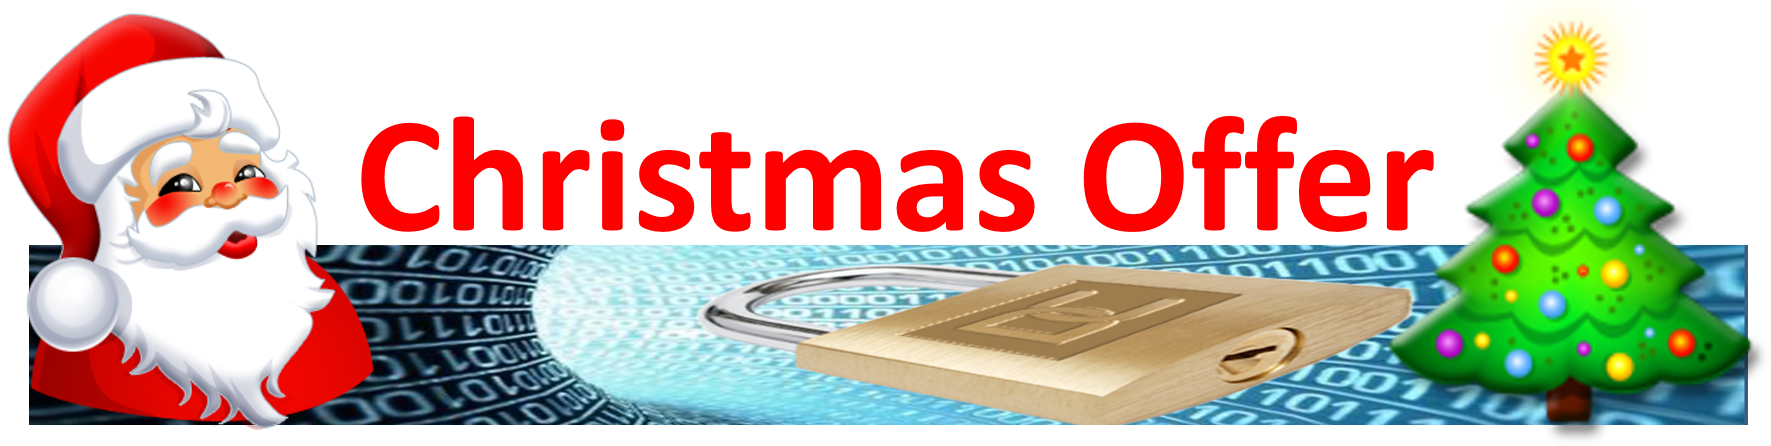 Christmas Offer Promotion Banner PNG image